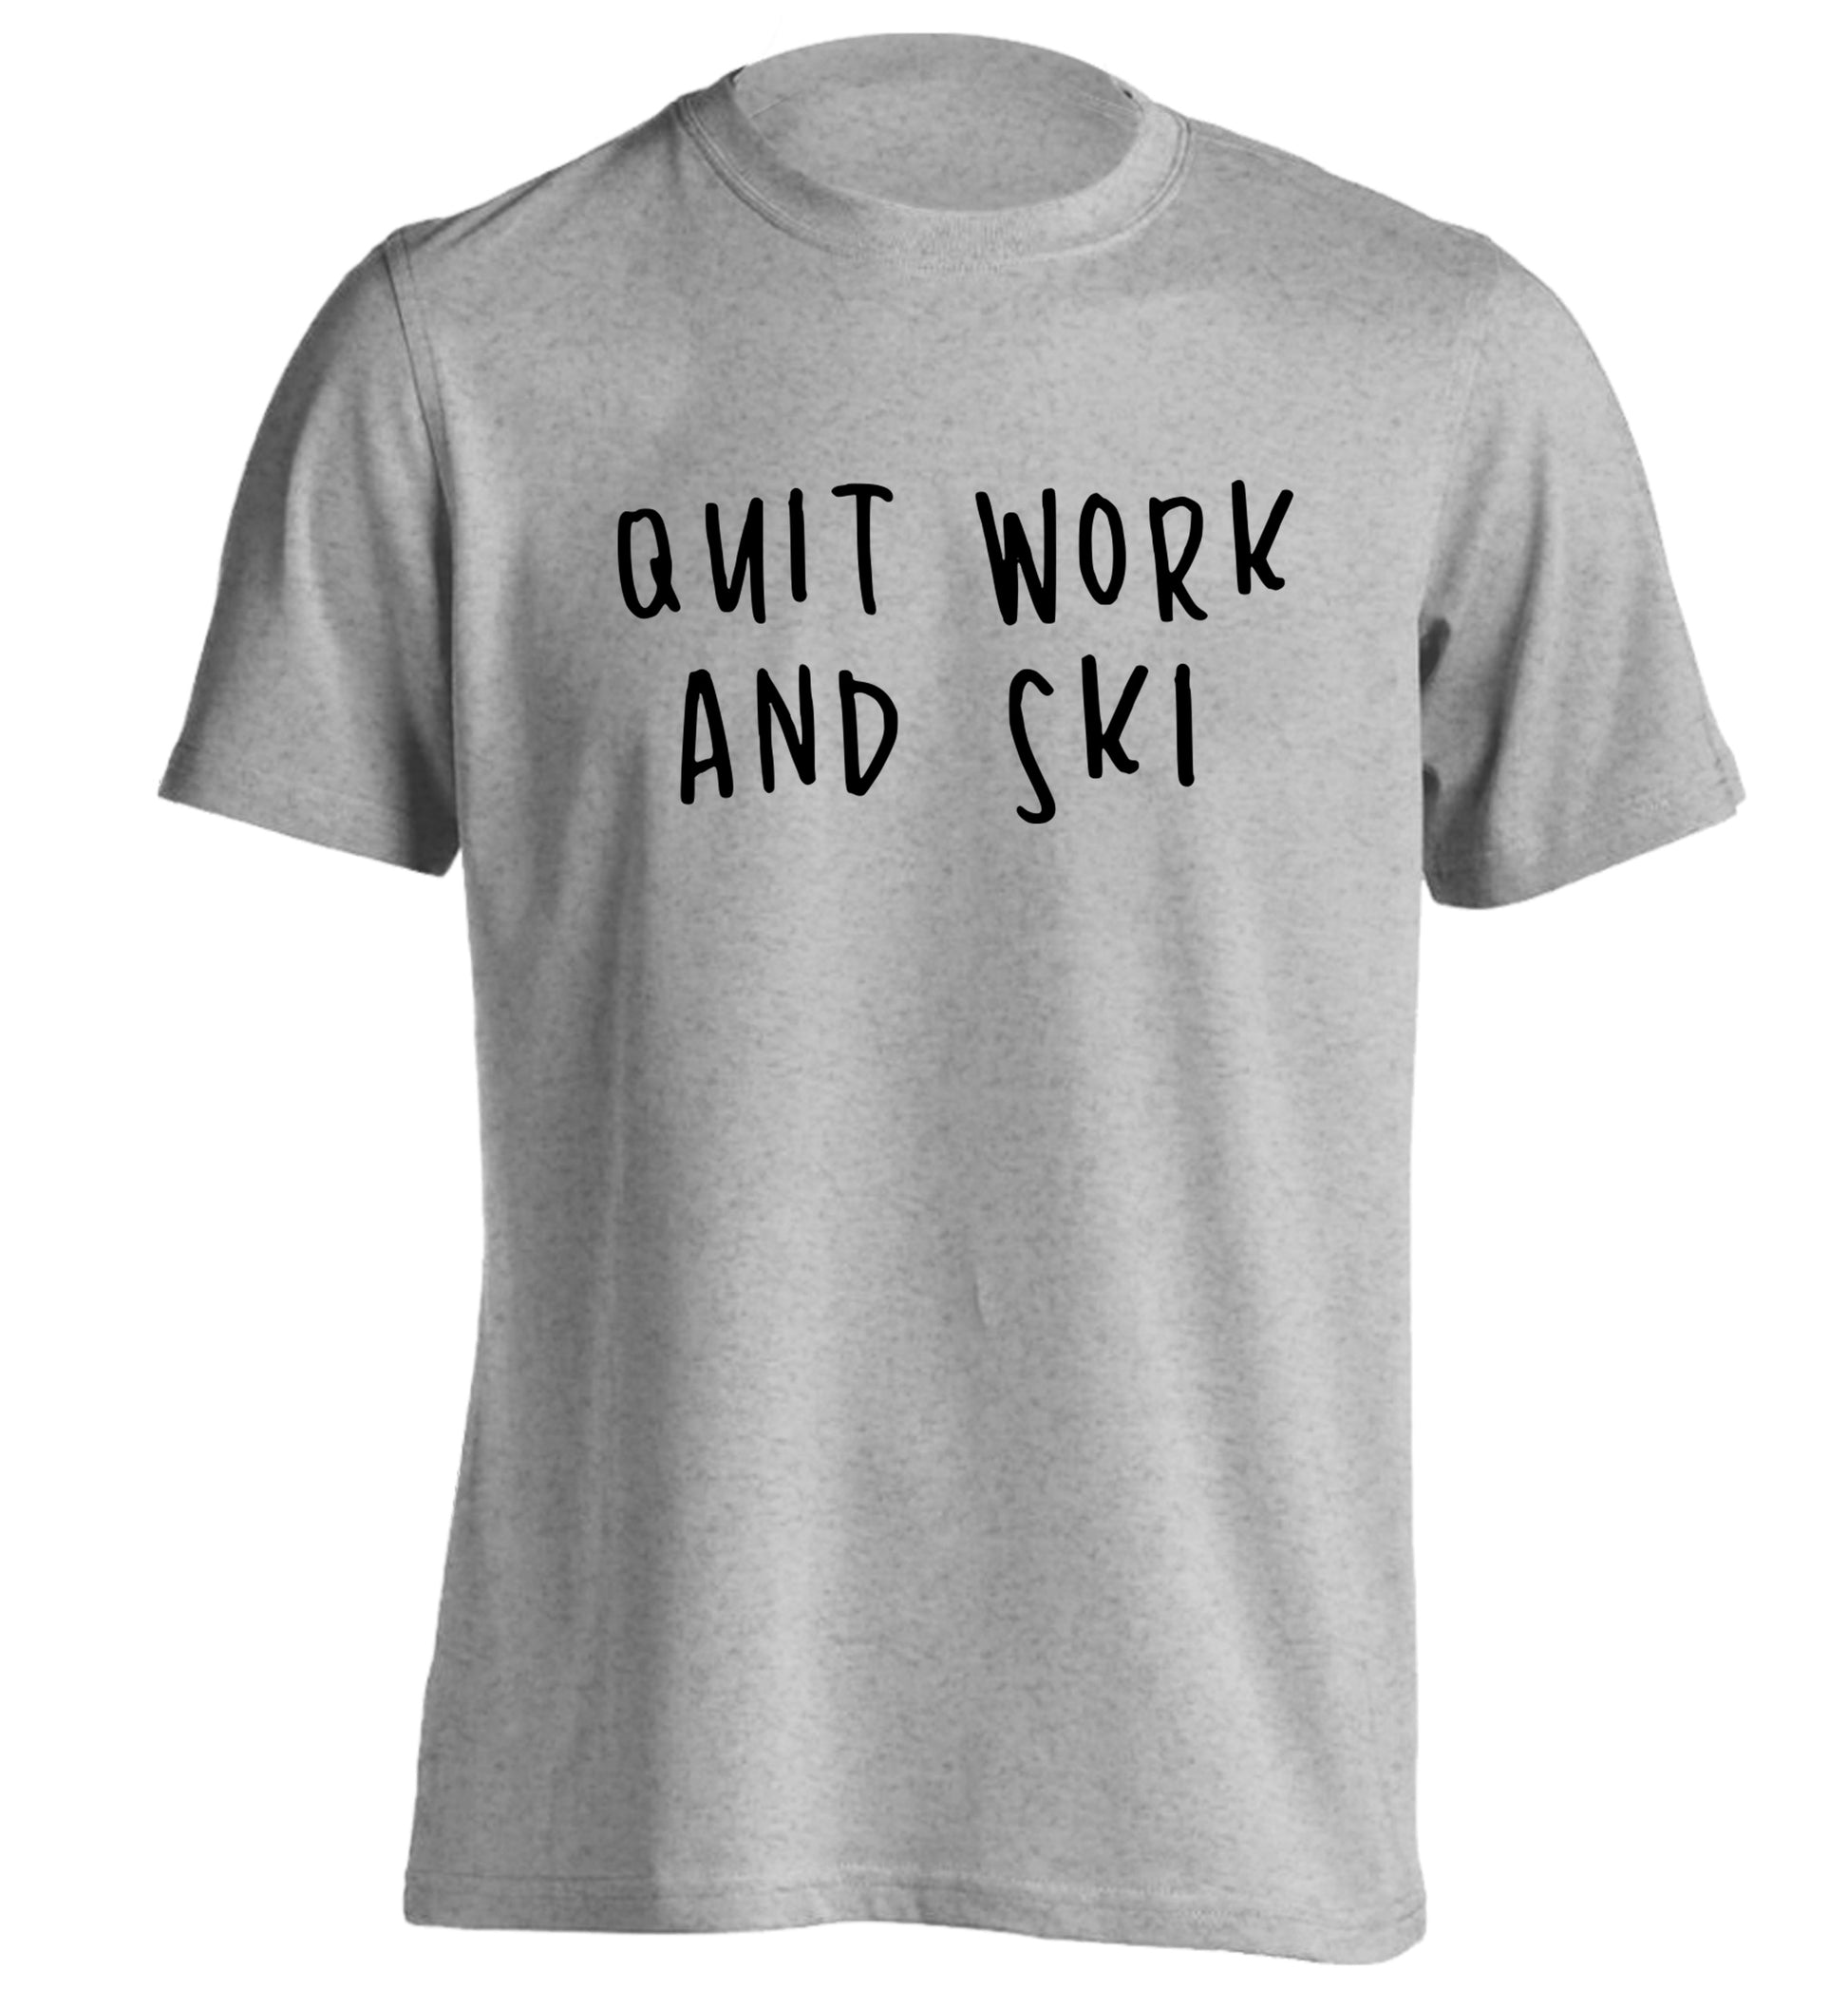 Quit work and ski adults unisexgrey Tshirt 2XL